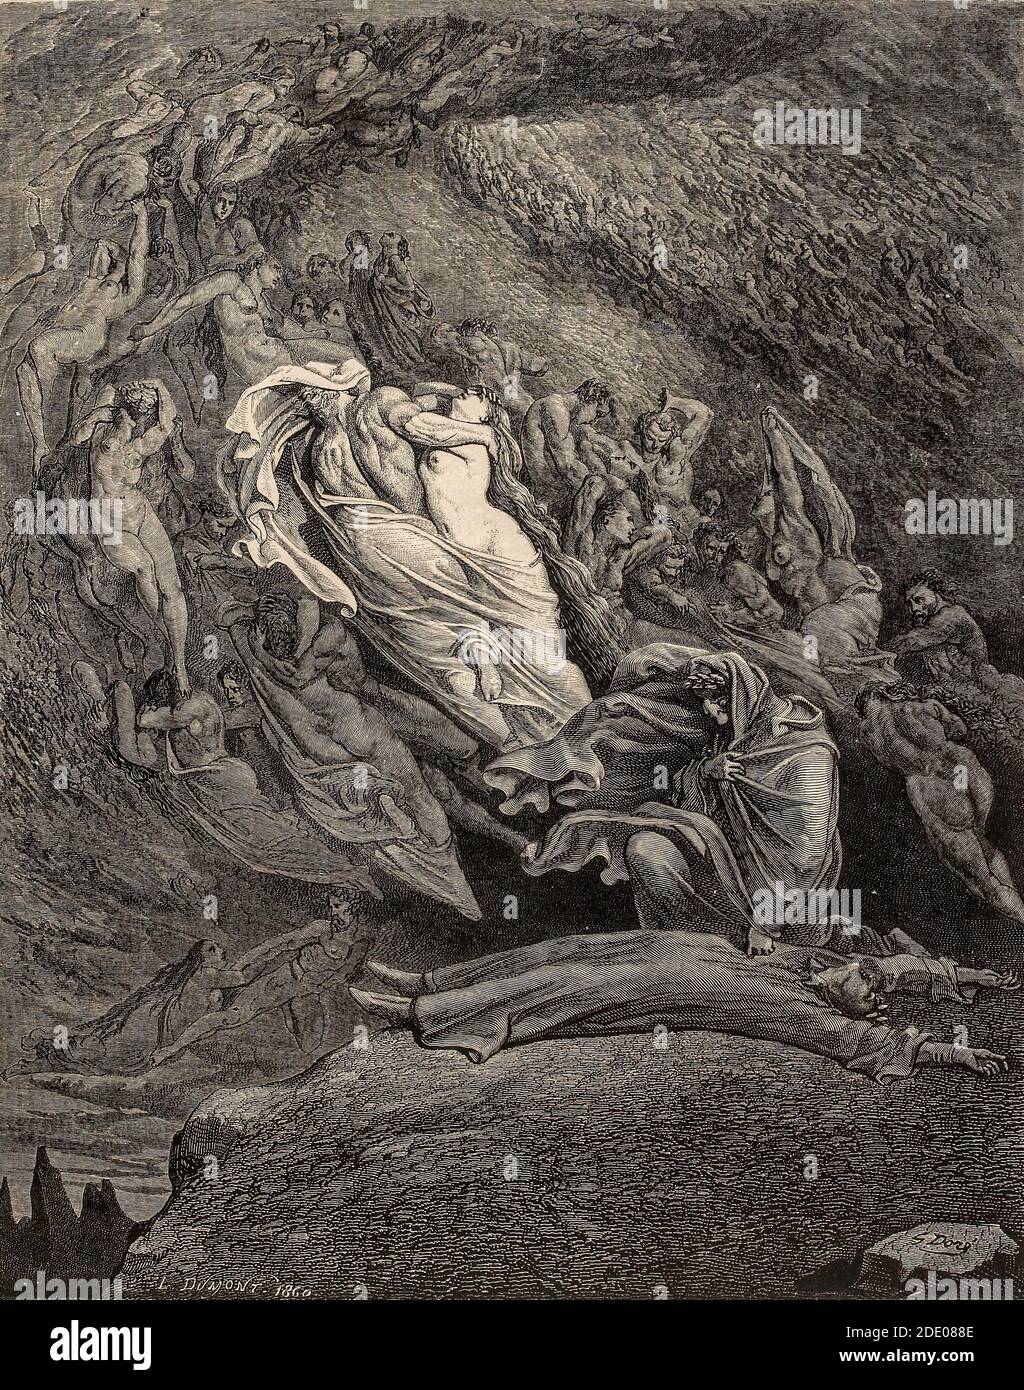 Dante Divina Commedia - Hell - Paolo  Malatesta and Francesca Da Rimini  - love beyond death  -  Canto V - circle of the lustful  - illustration by Gustave Dorè Stock Photo